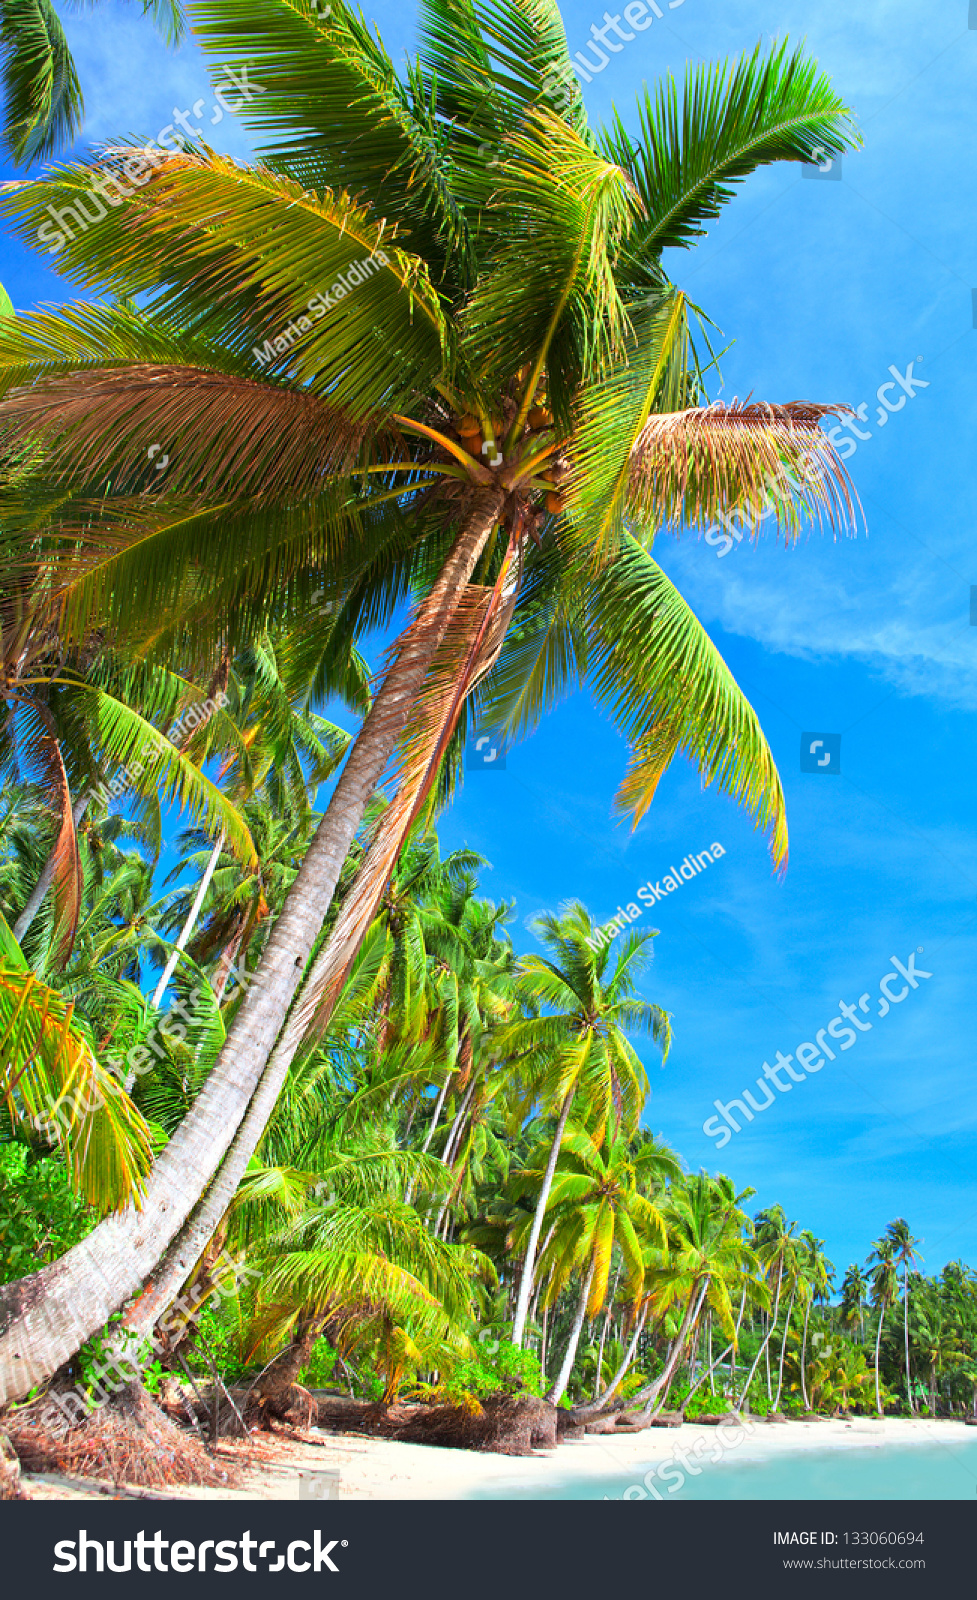 Beautiful Palm Tree On The Beach. Dream Vacation Scene. Stock Photo ...